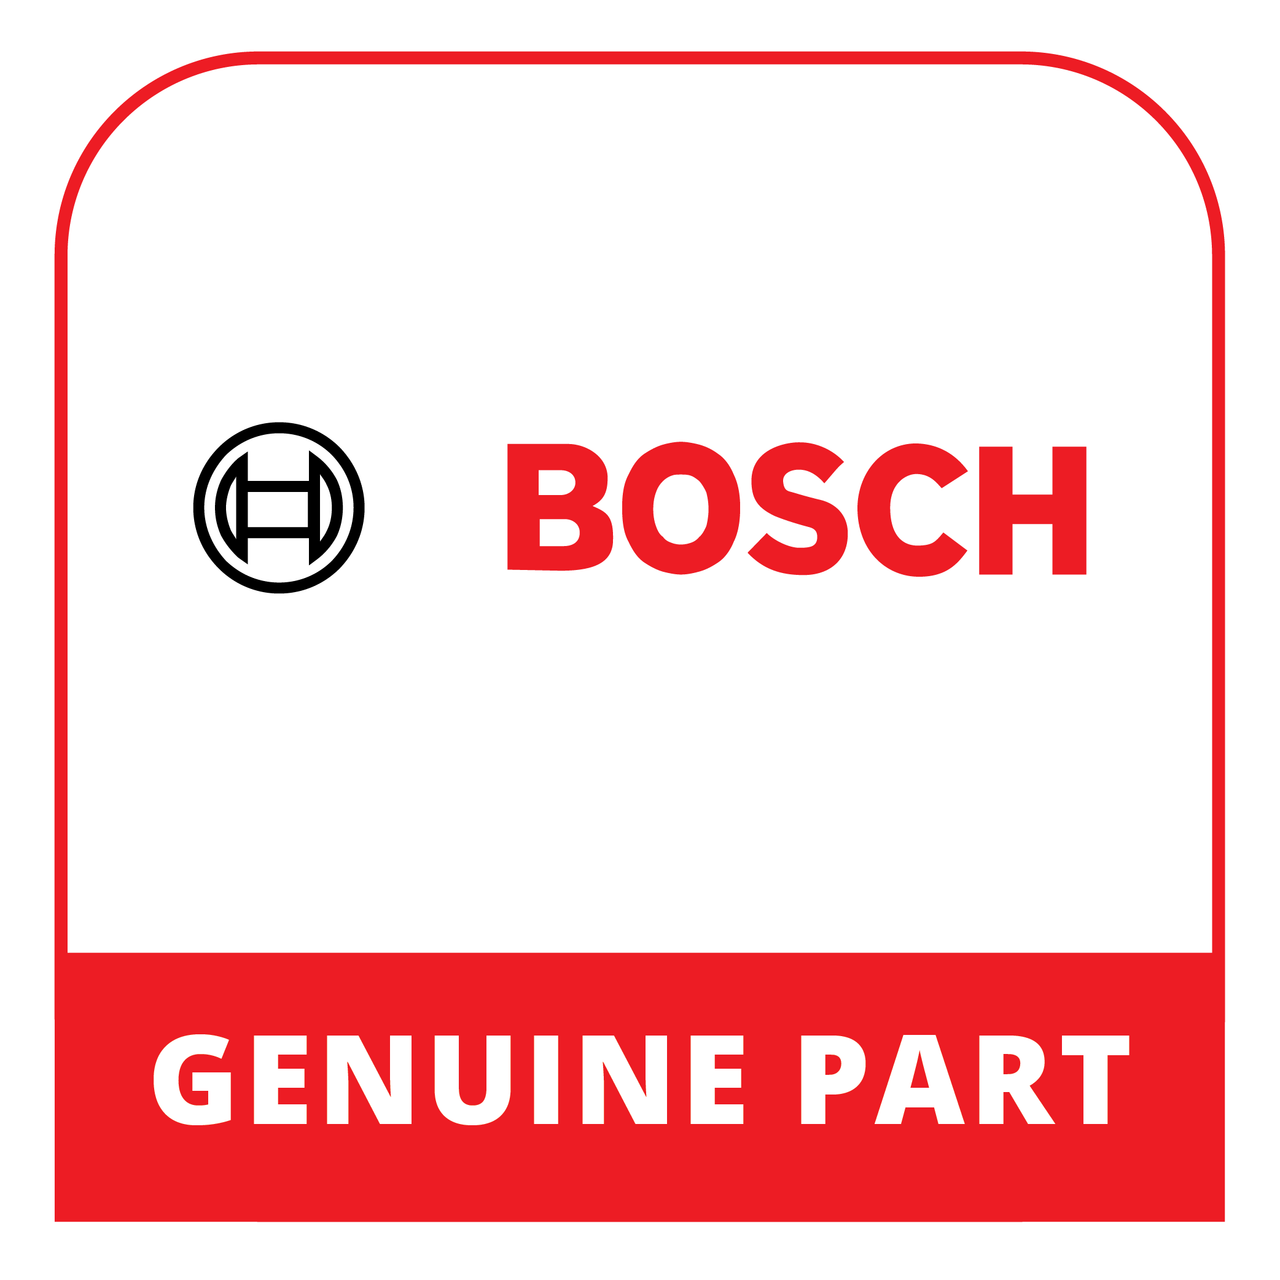 Bosch (Thermador) 23001205 - Freezer Basket - Genuine Bosch (Thermador) Part